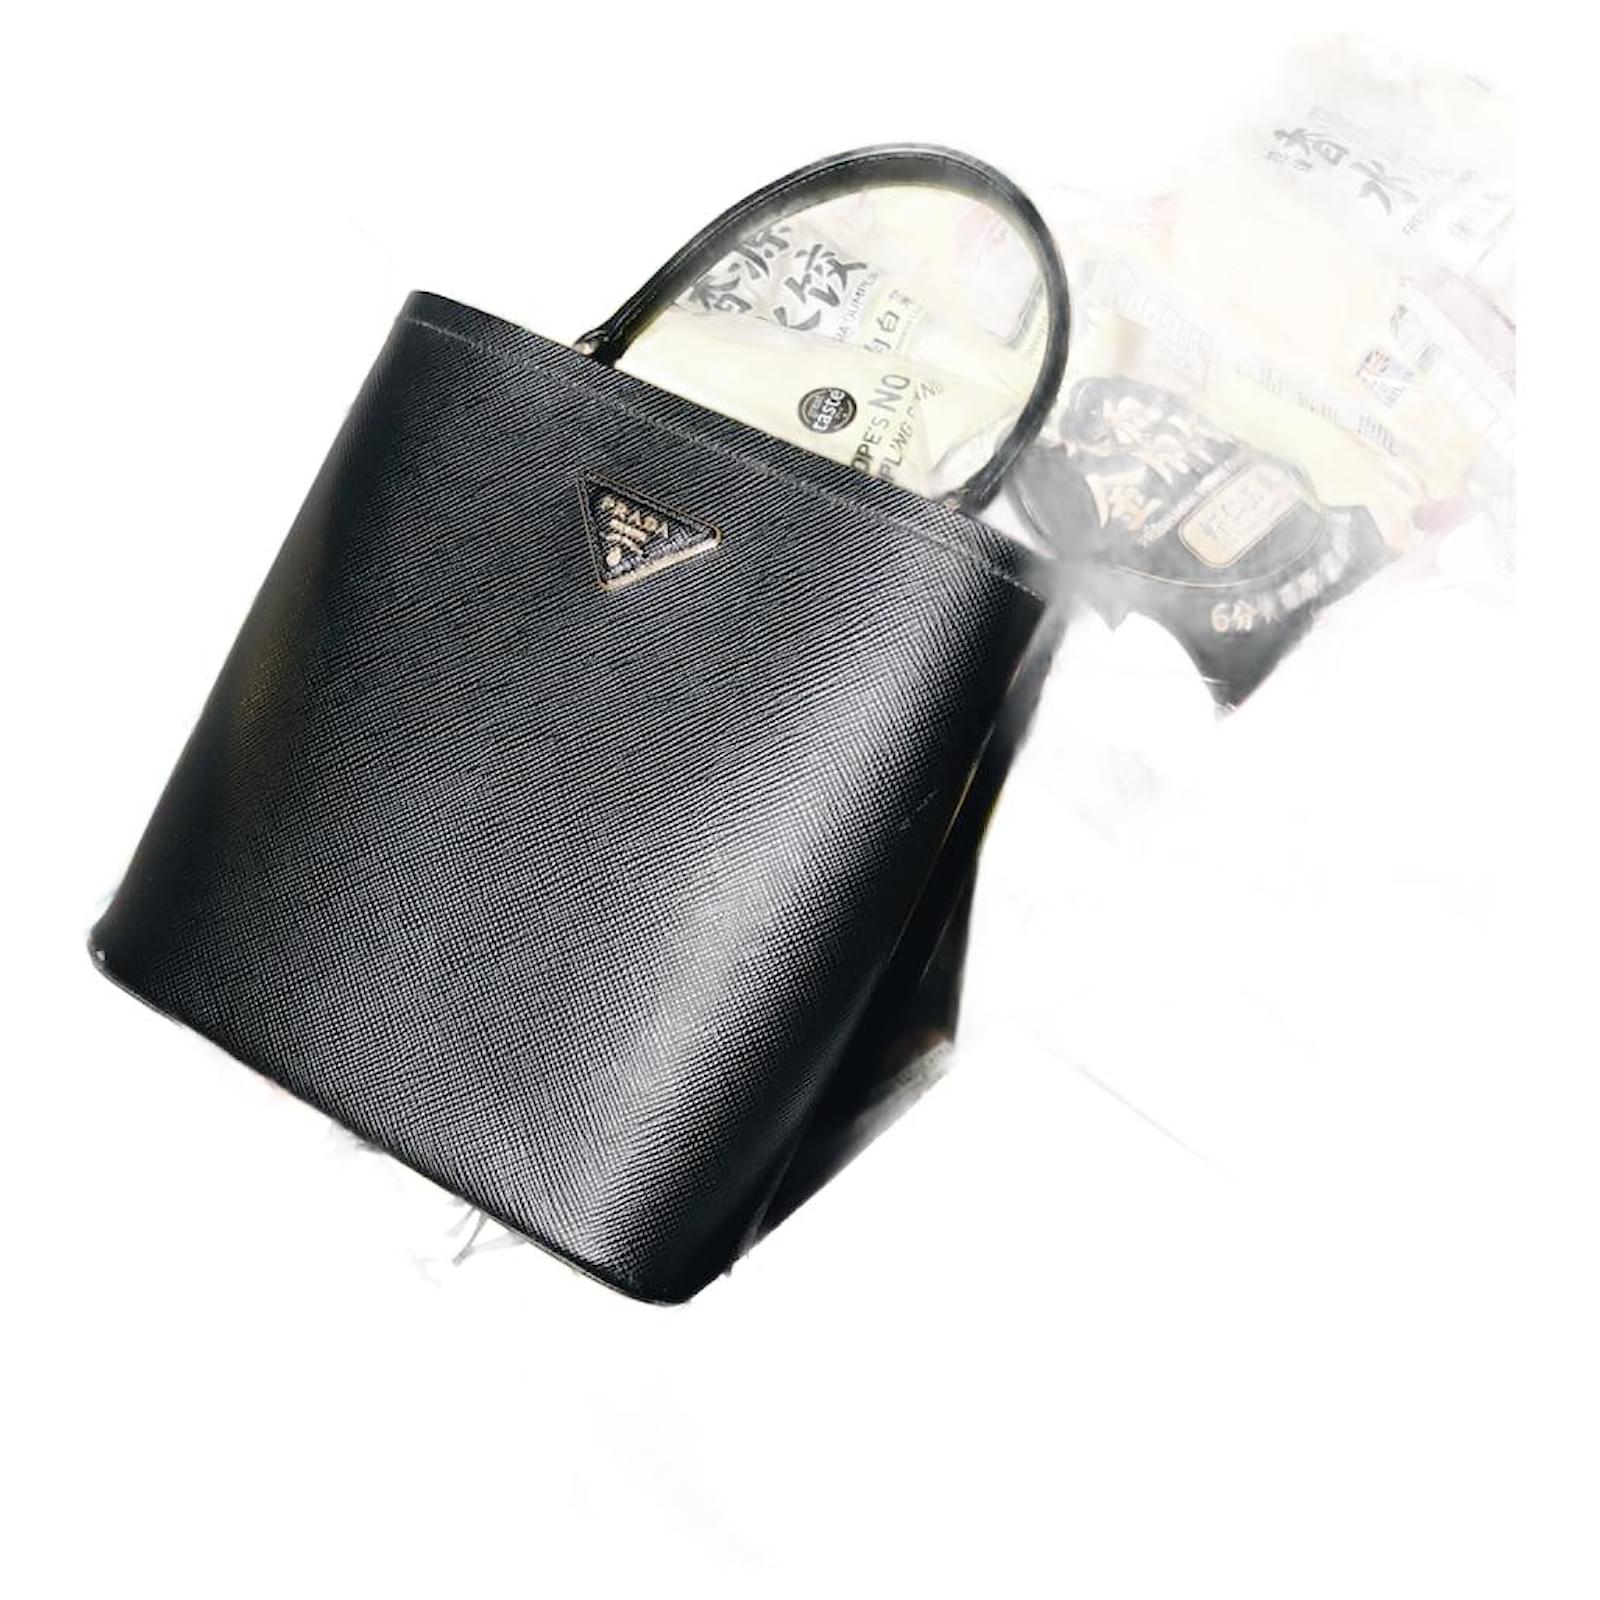 Prada Saffiano Leather Shoulder Bag In Black